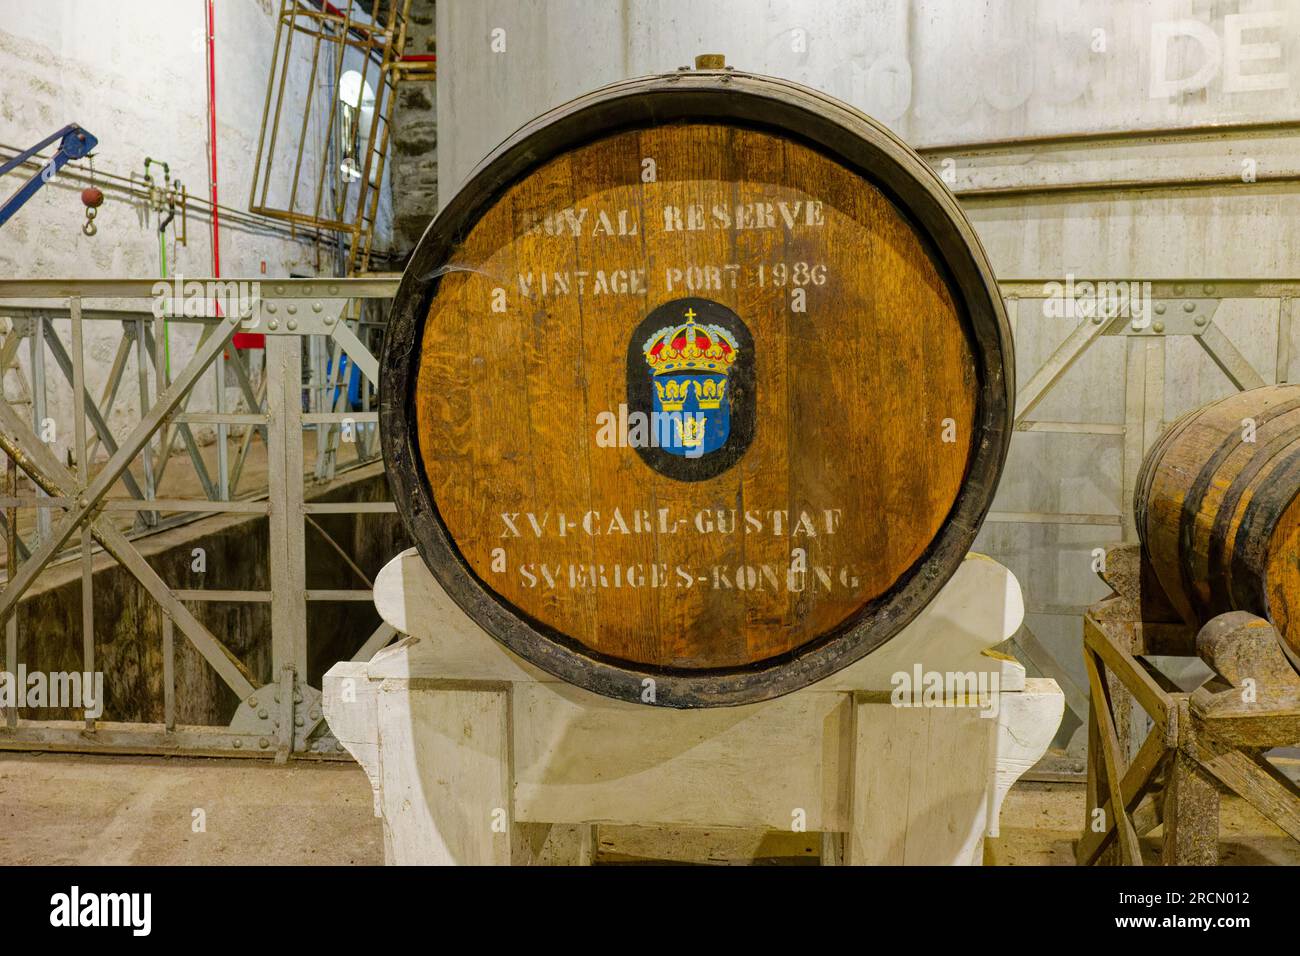 Real Companhia Velha cask of Royal Reserve Port in their cellar, Porto, Portugal Stock Photo